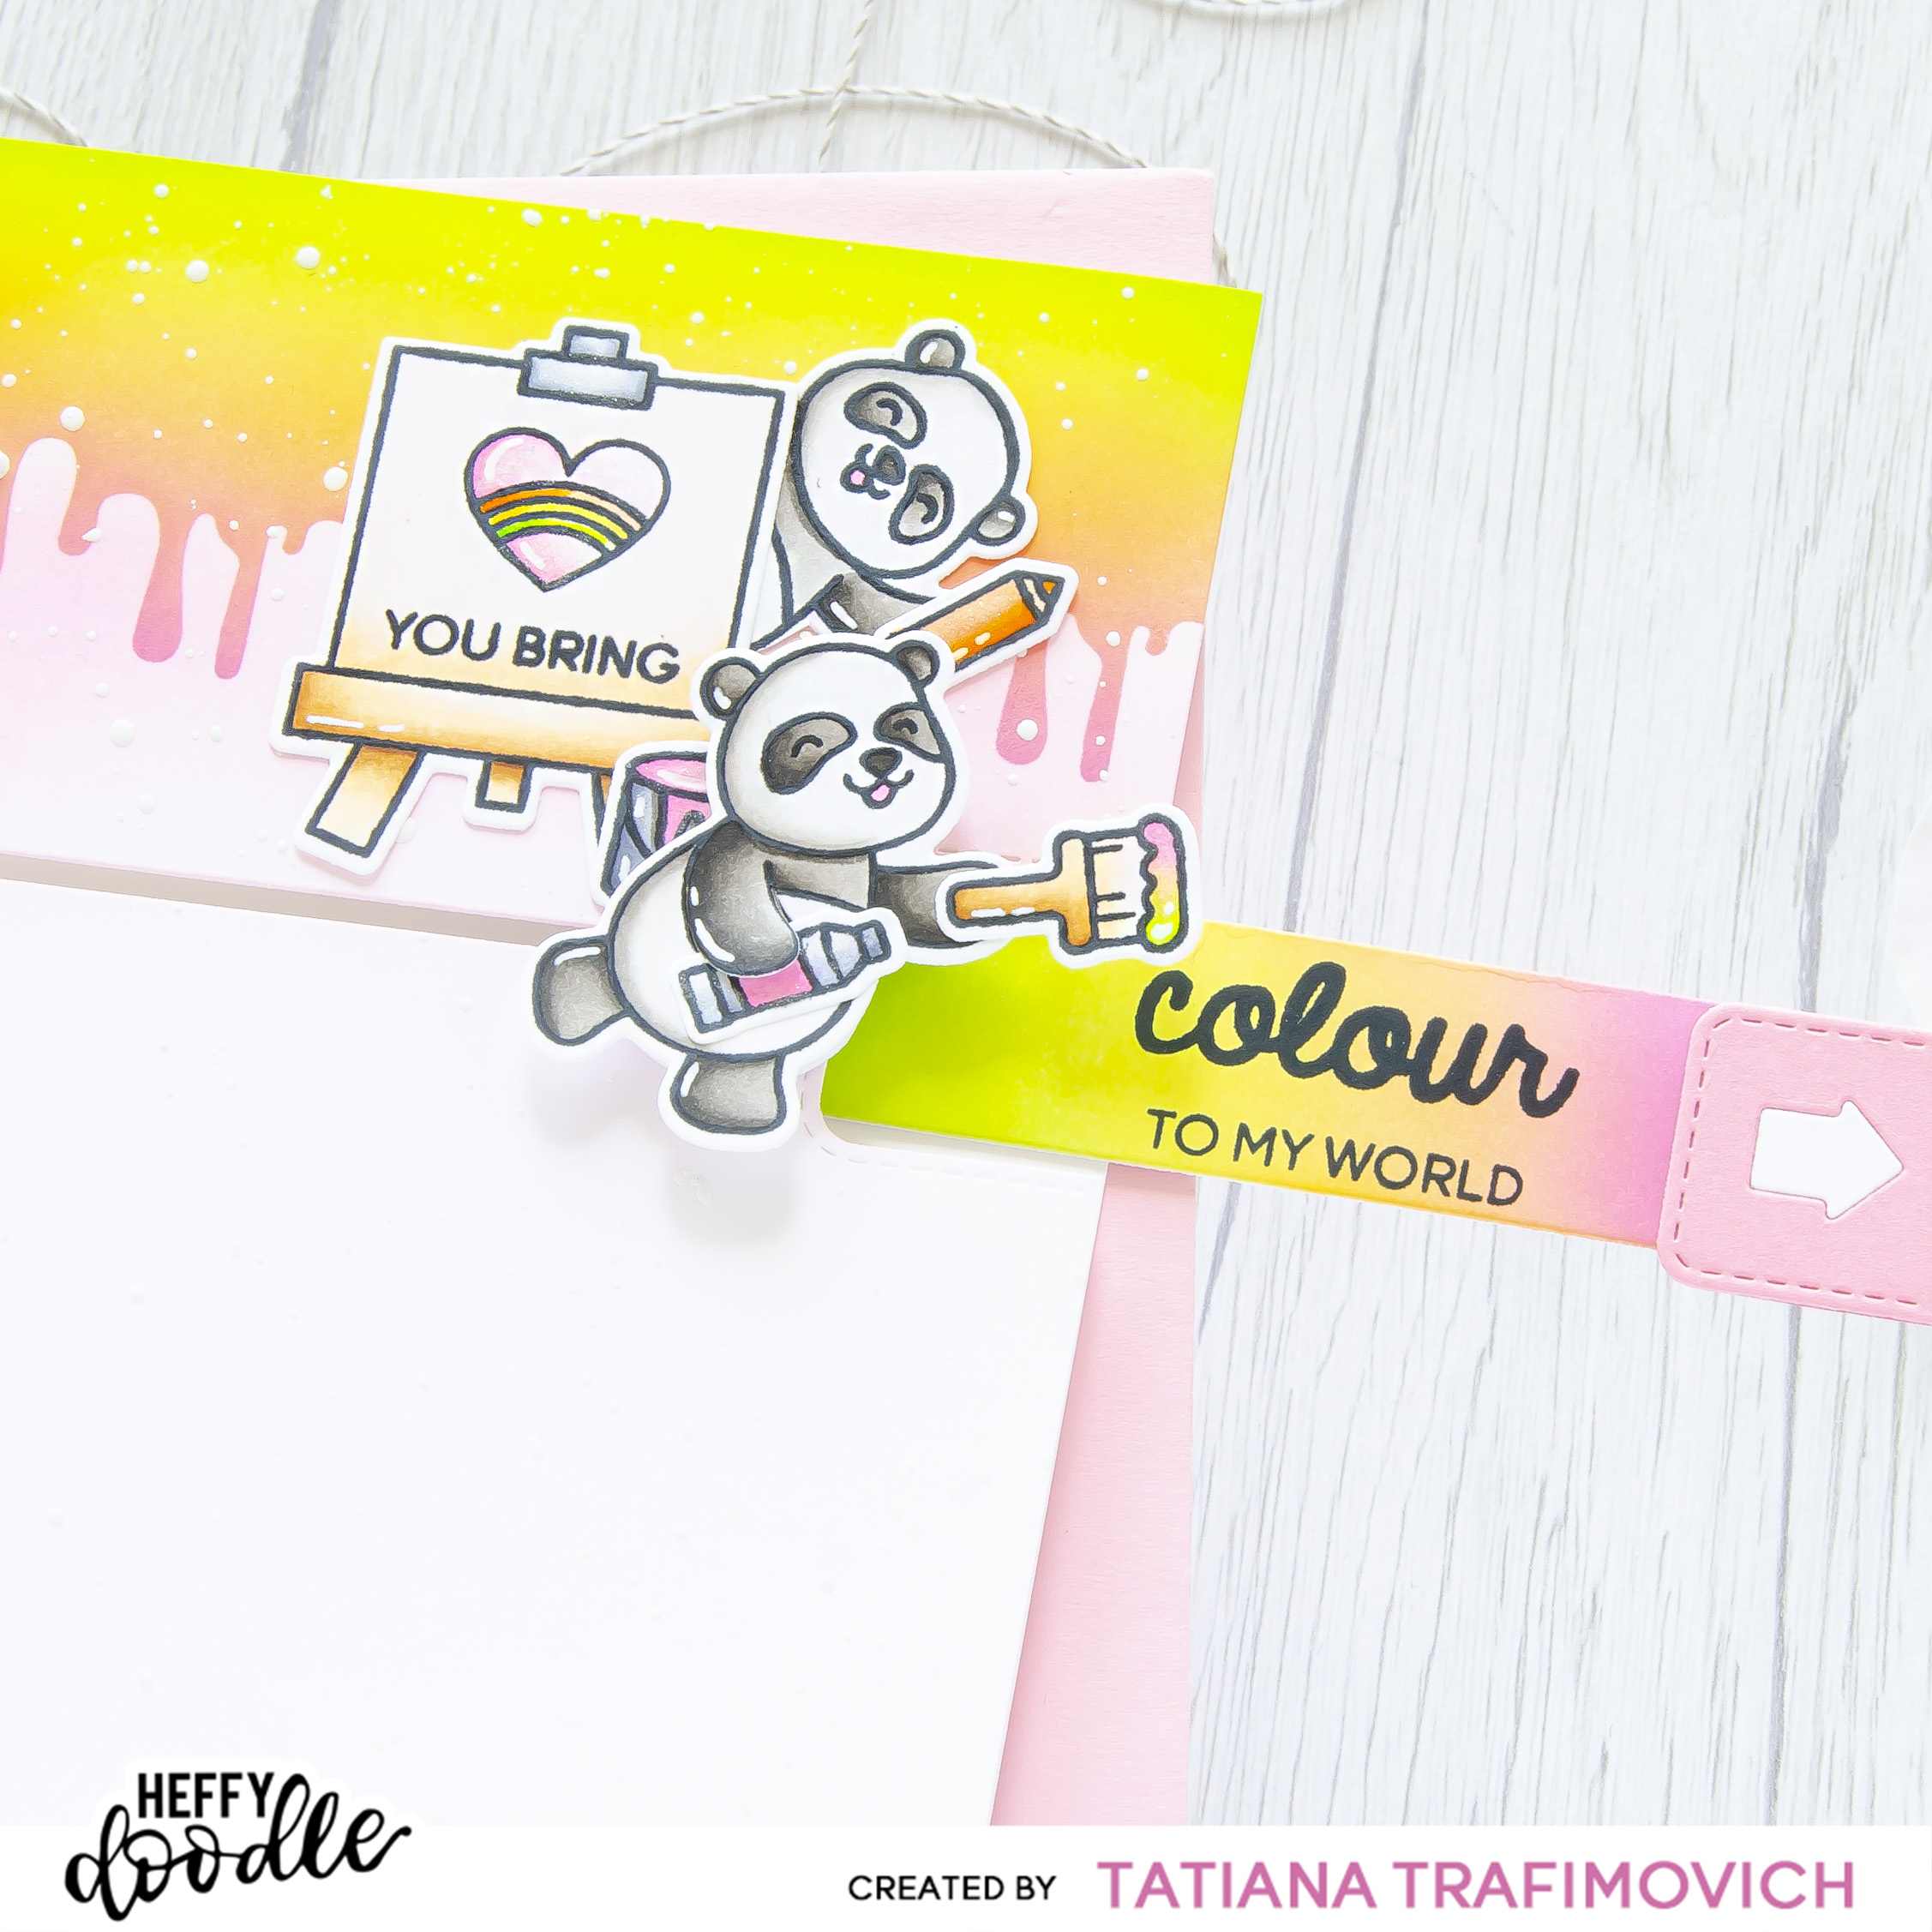 You Bring Colour To My World #handmade card by Tatiana Trafimovich #tatianacraftandart - Pandtastic Painters Stamp Set by Heffy Doodle #heffydoodle